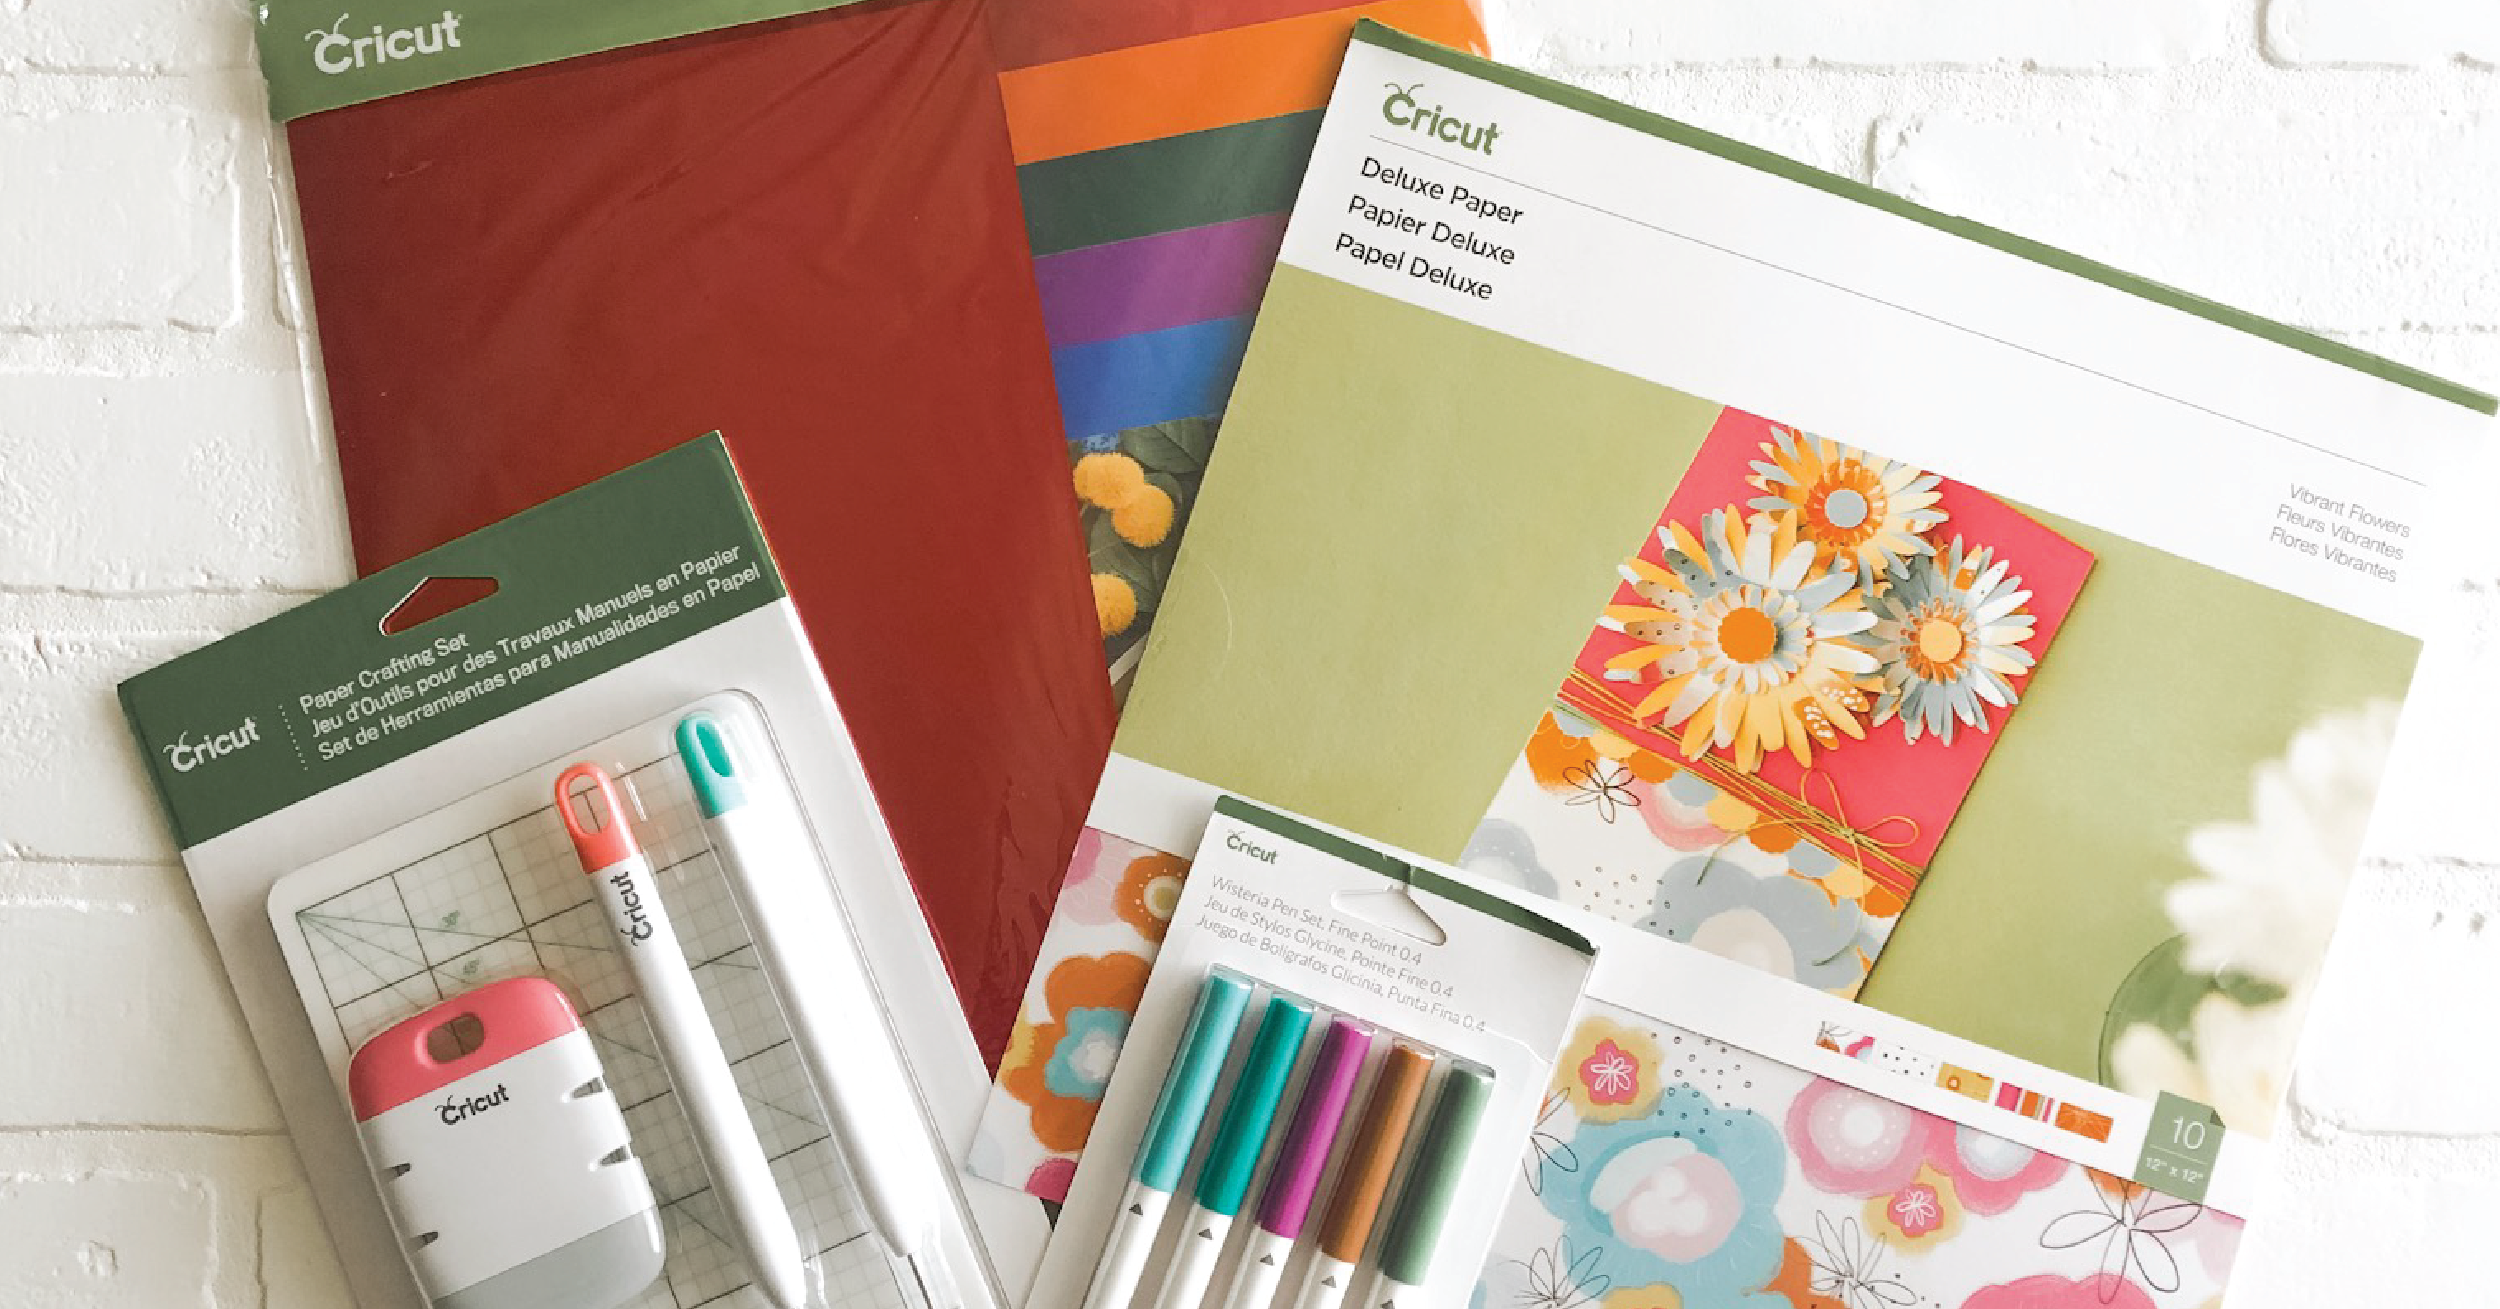 Cricut Joy Insert Cards Bundle Set, Pastel and Princess Sampler with  Glitter Gel Pens 